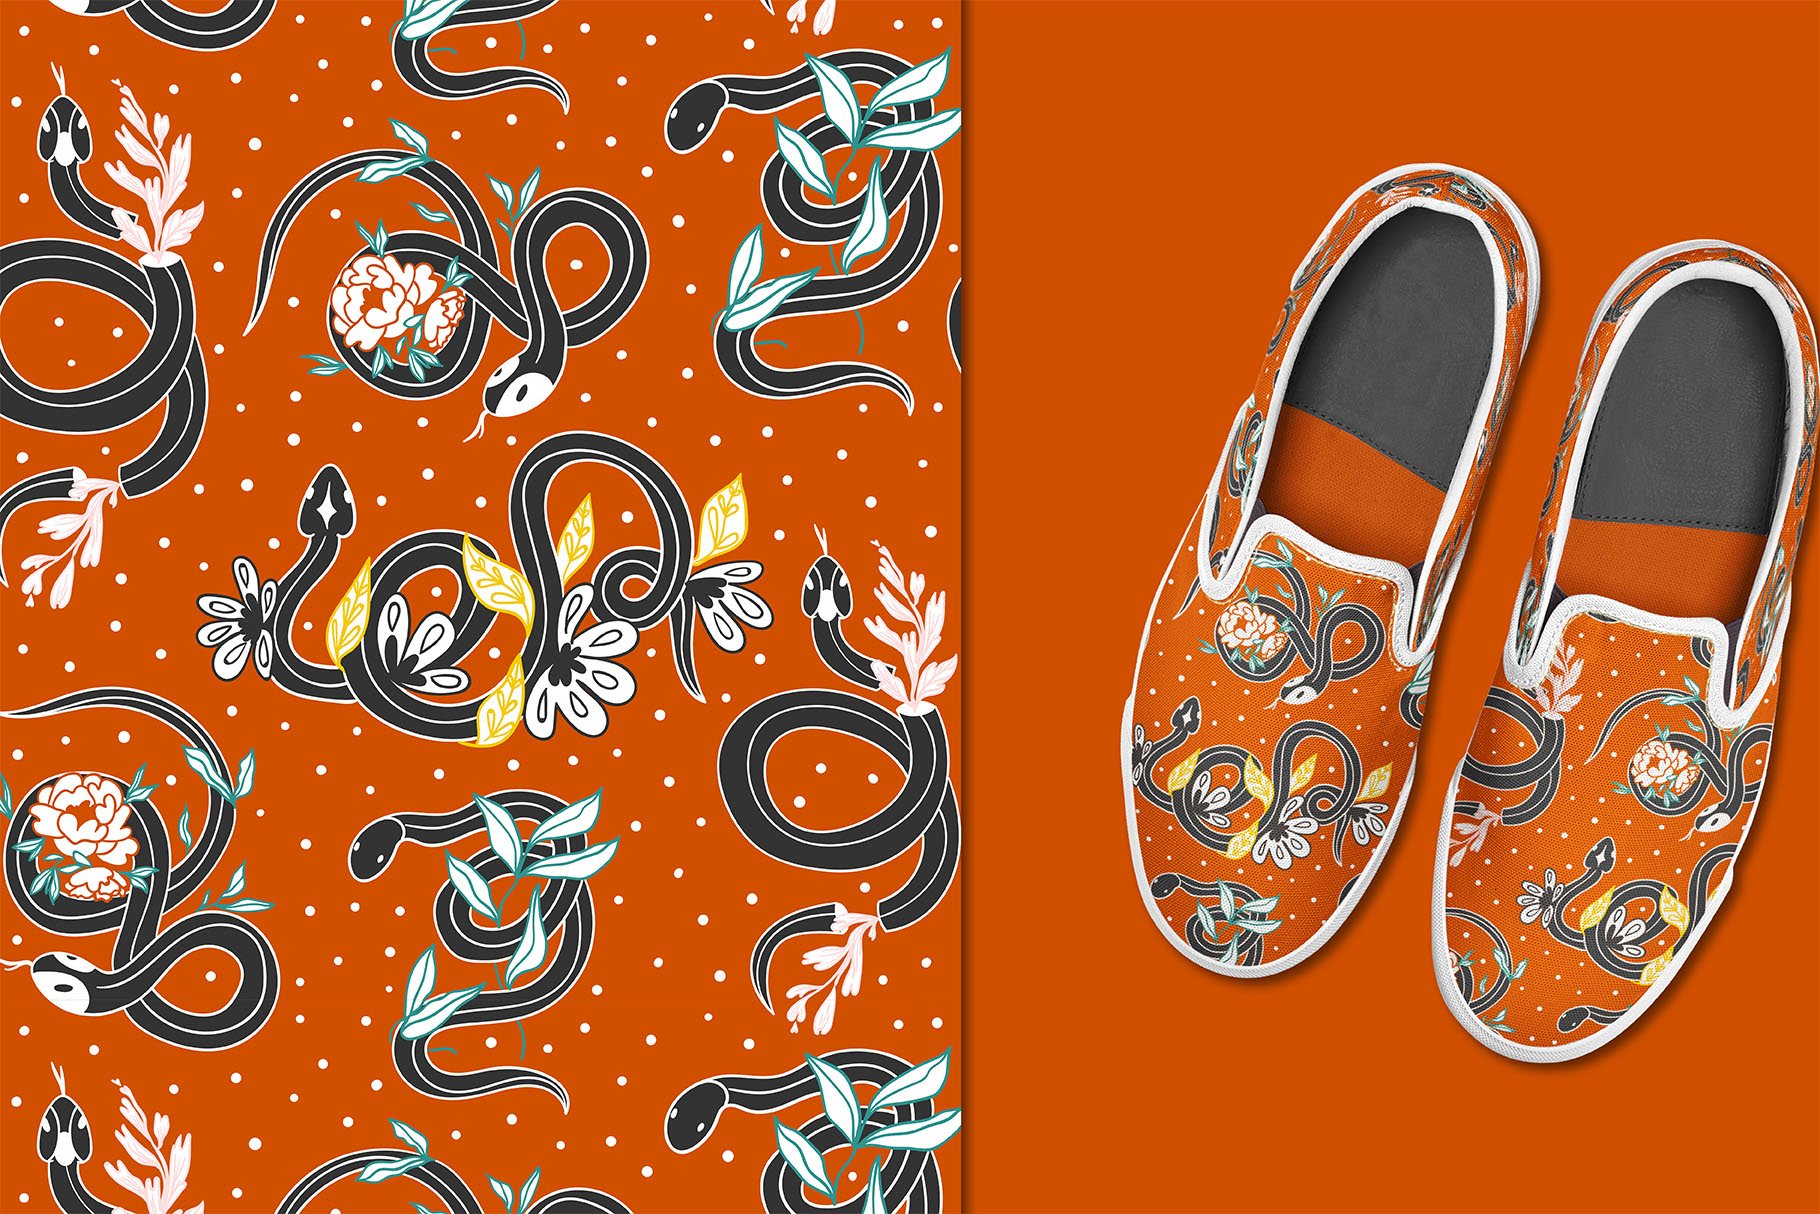 Colorful snake illustration for shoes.